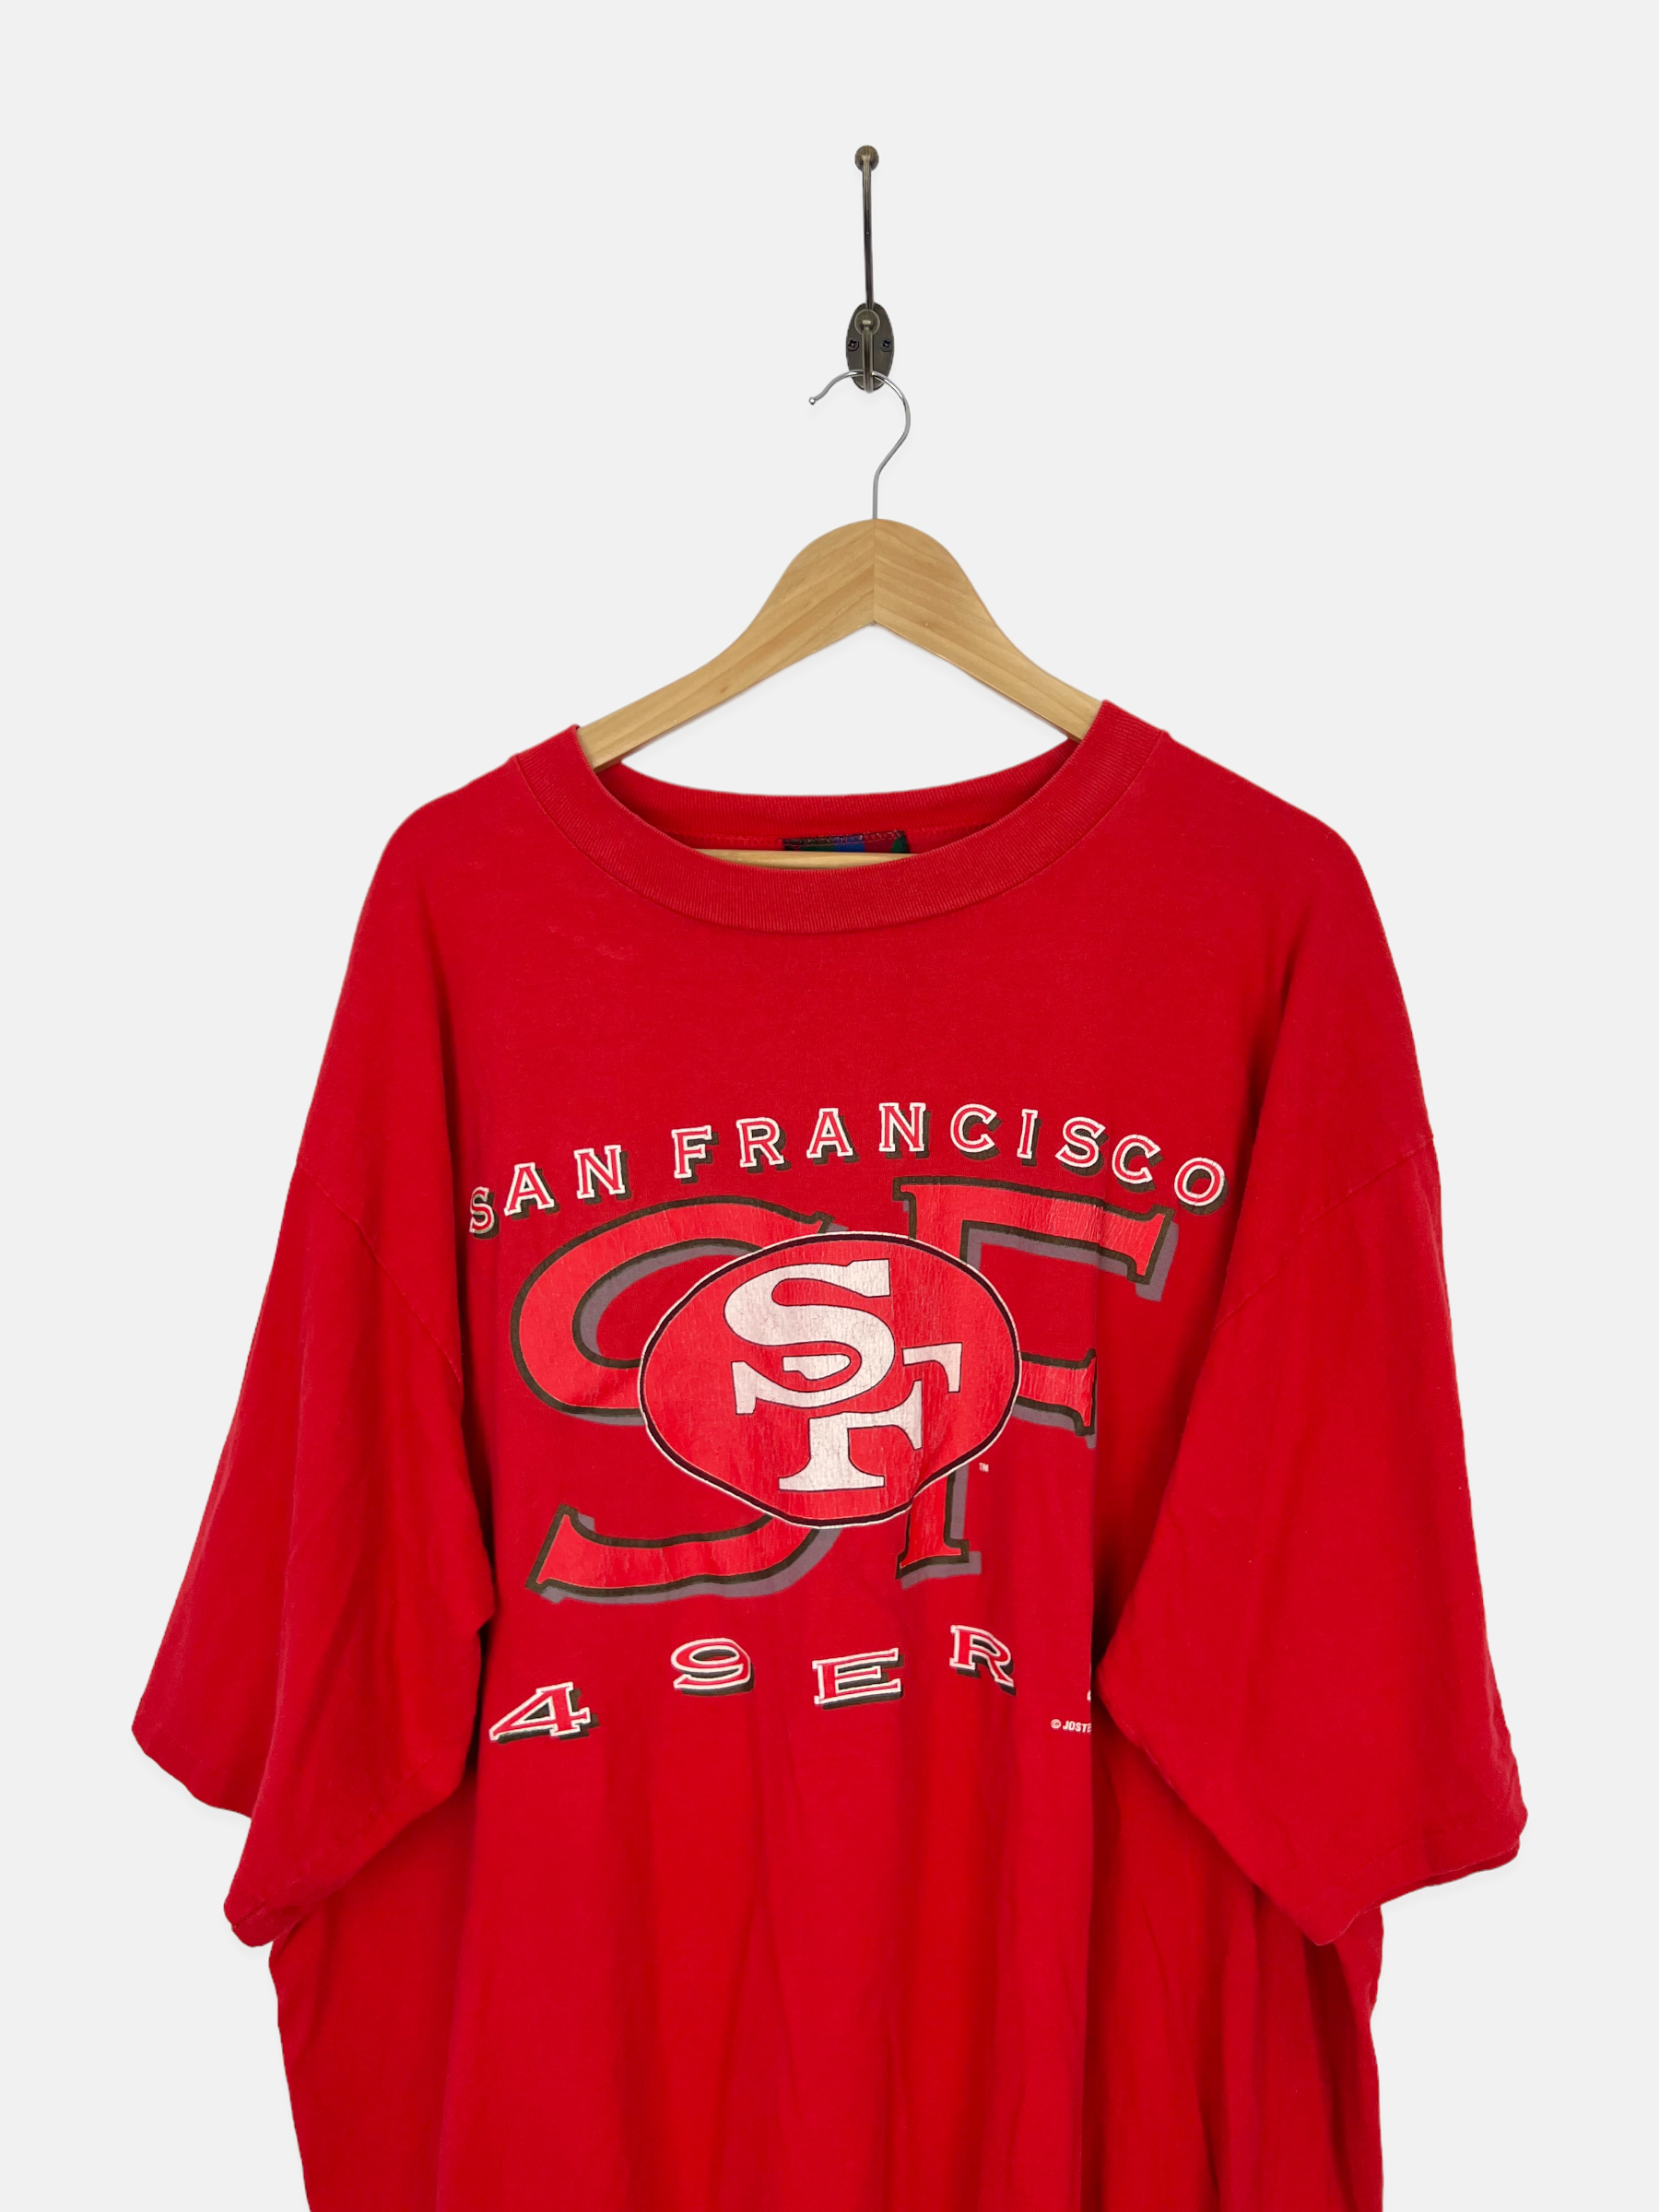 San Francisco Football Shirt, San Francisco 49Ers Apparel - Podhalastore